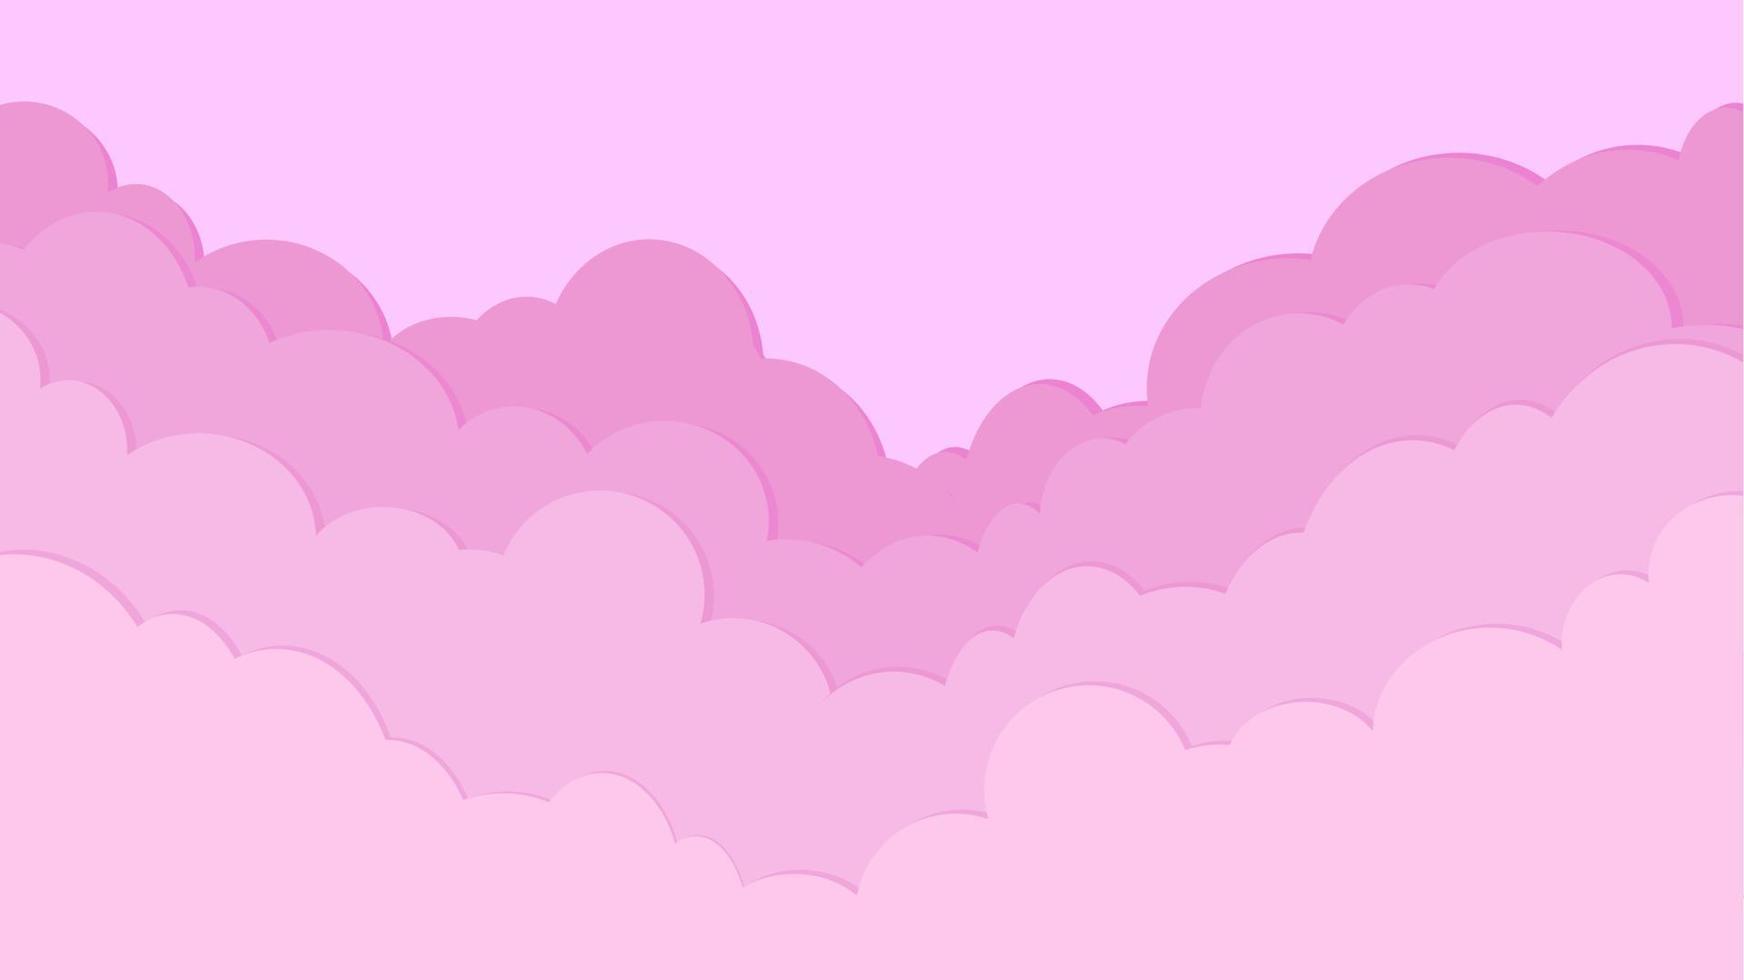 céu de nuvem rosa vetor